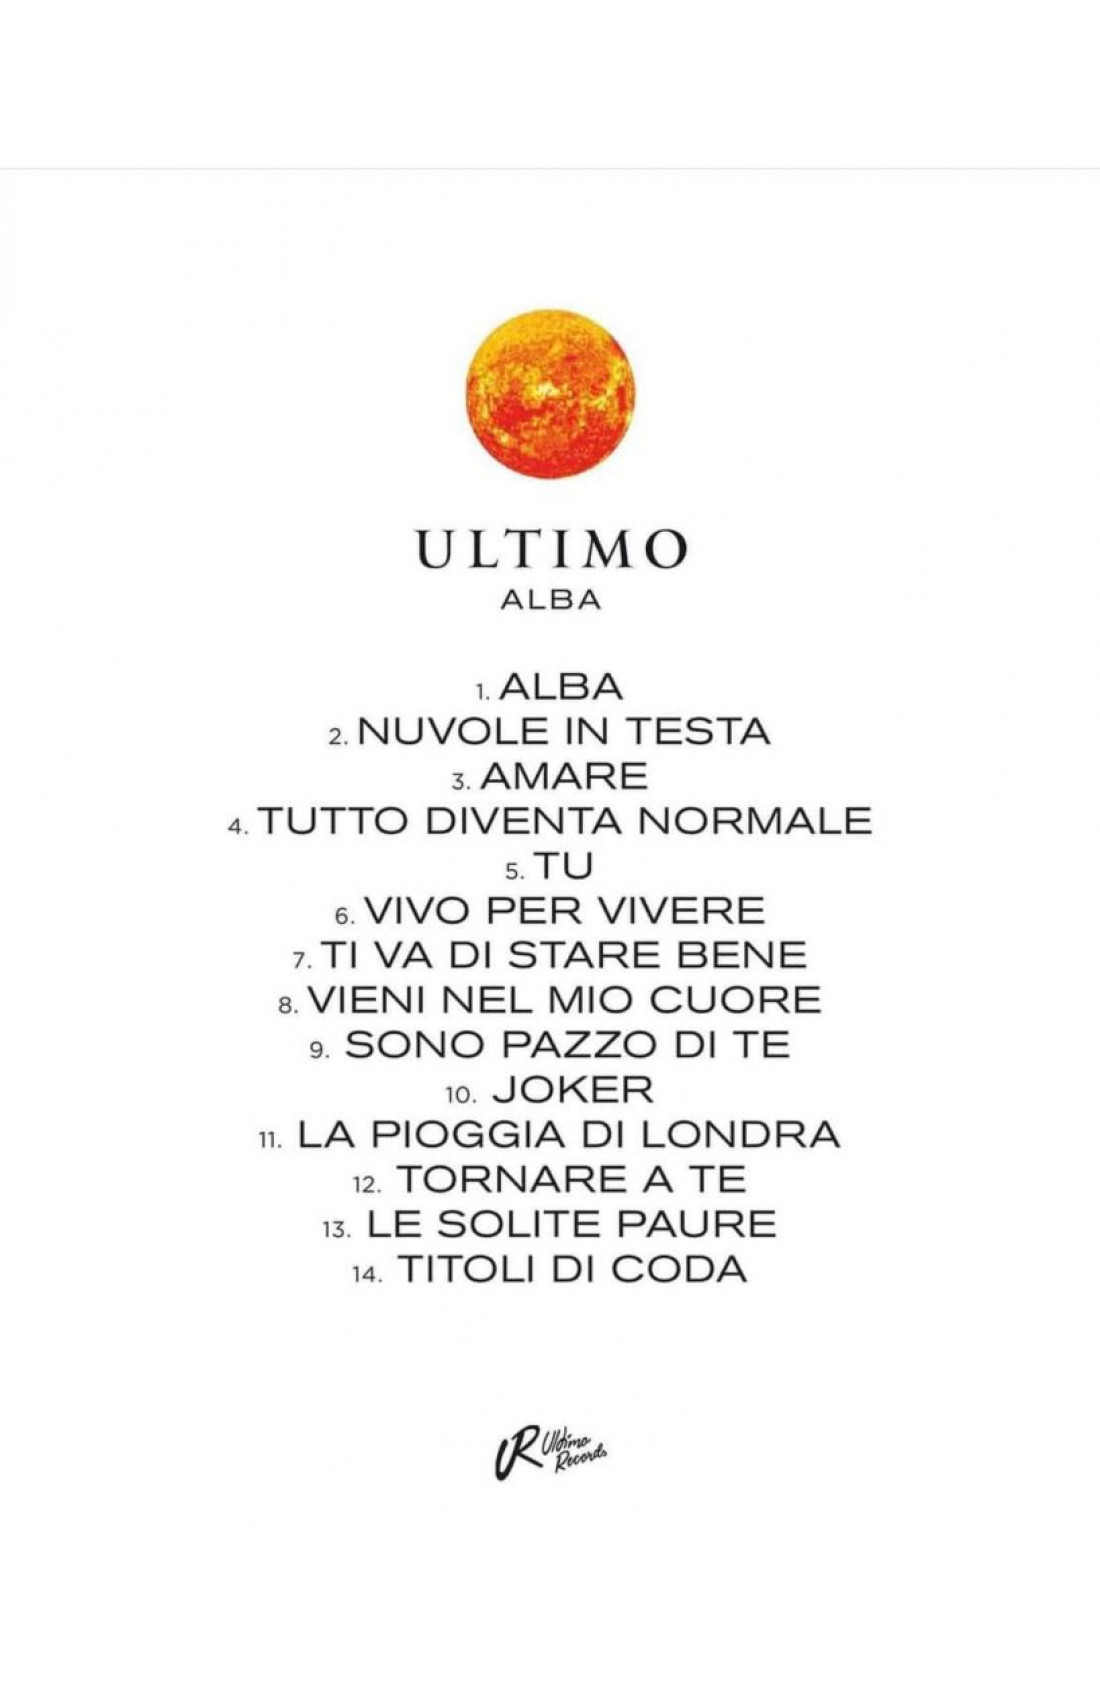 Ultimo - Alba (CD) - Italiani - CD